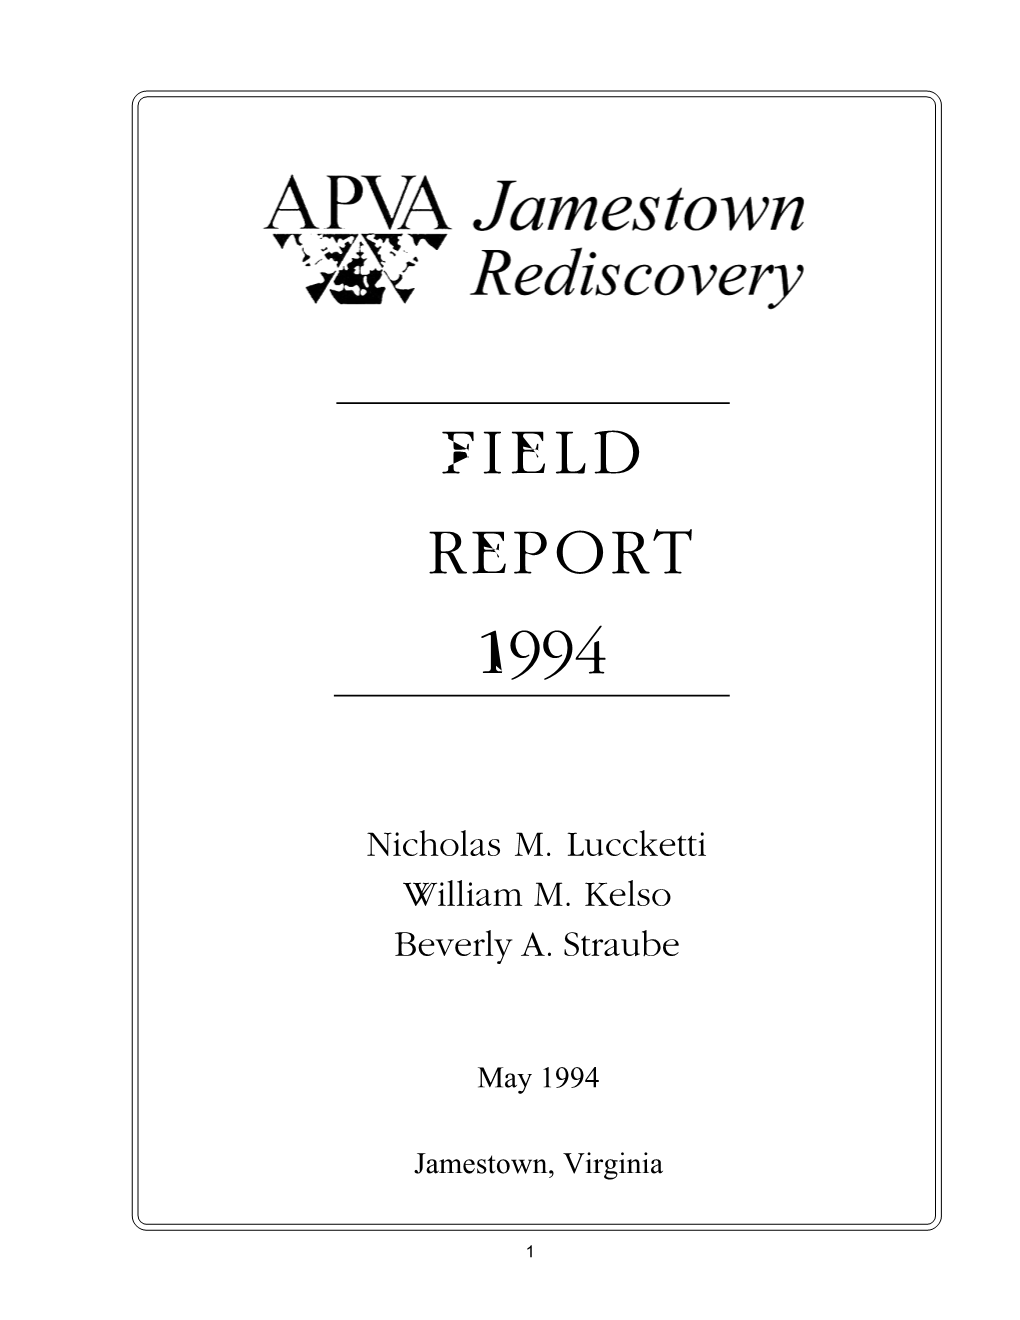 1994 Field Report